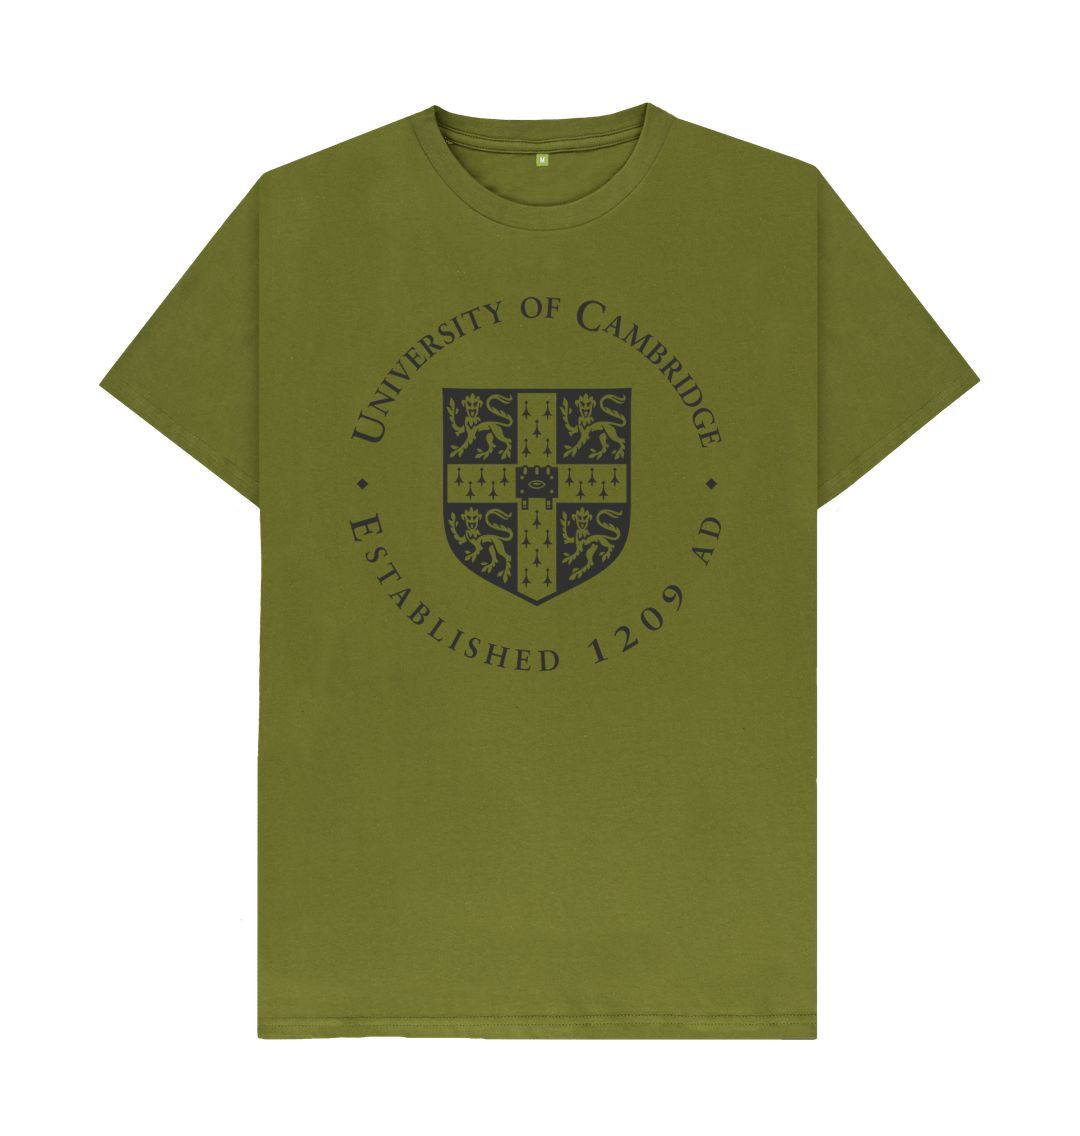 Moss Green Men's University of Cambridge Crew Neck Tee